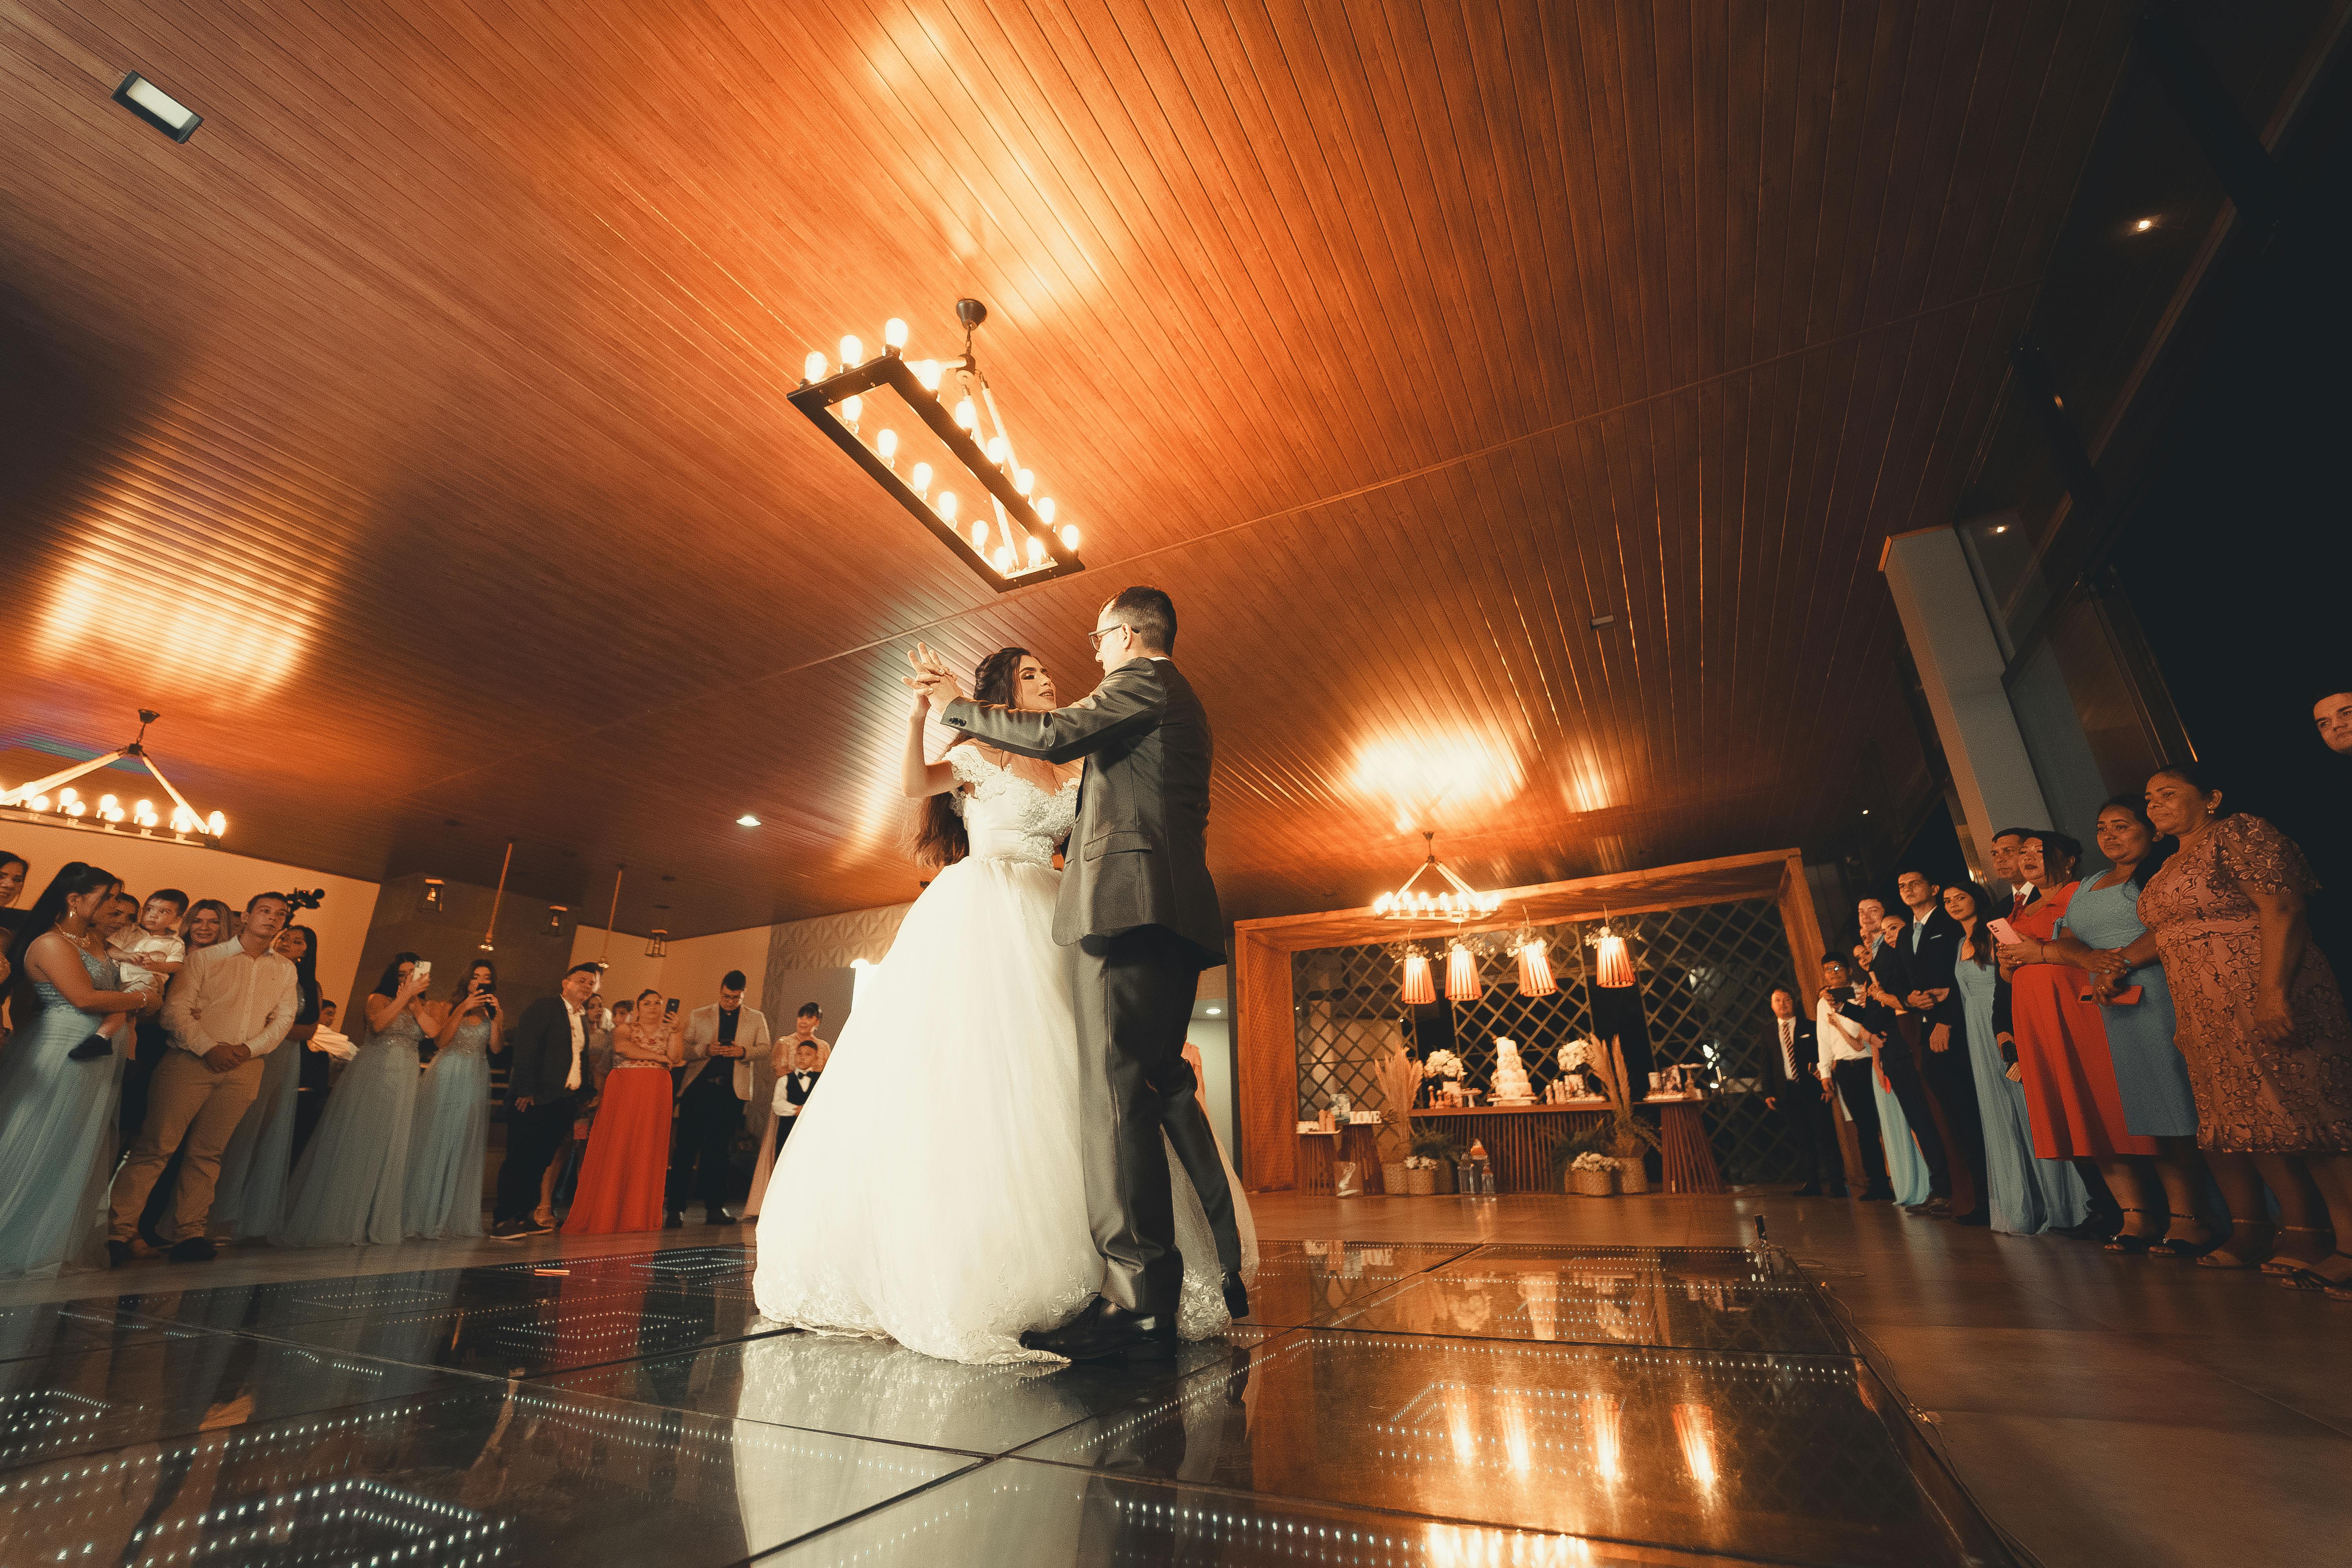 A bride and groom dancing at a wedding reception | Source: Pexels